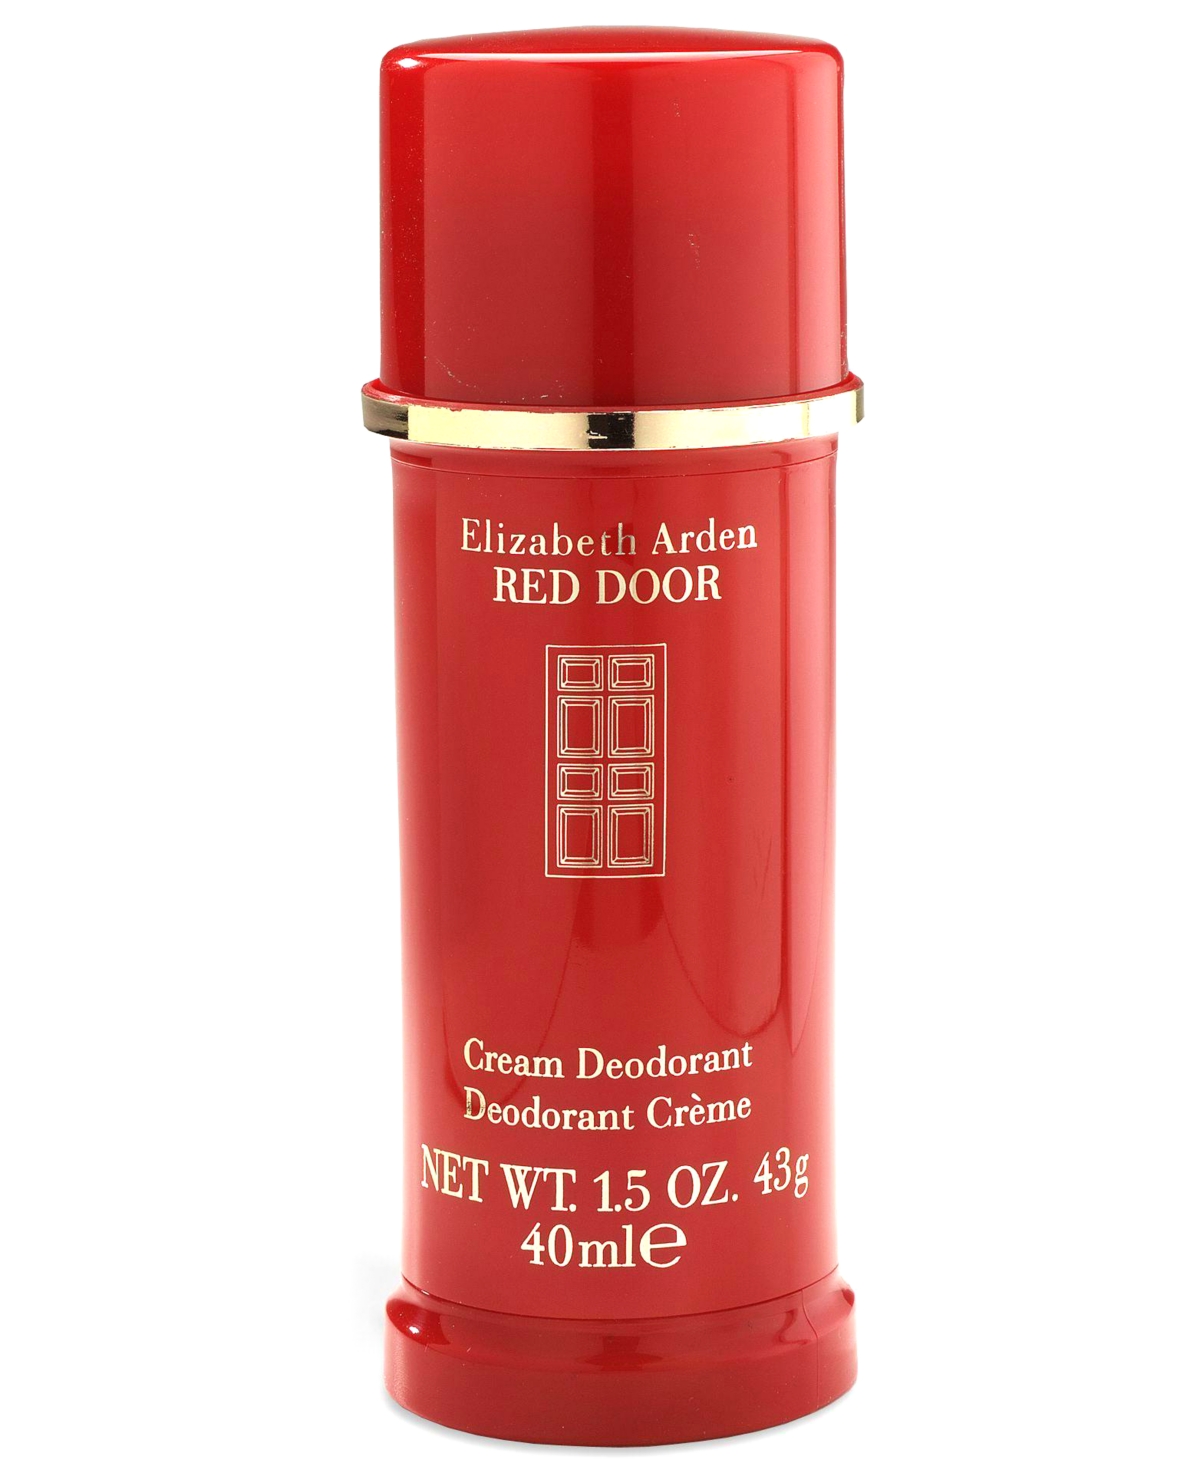 Red Door Cream Deodorant, 1.5 oz.